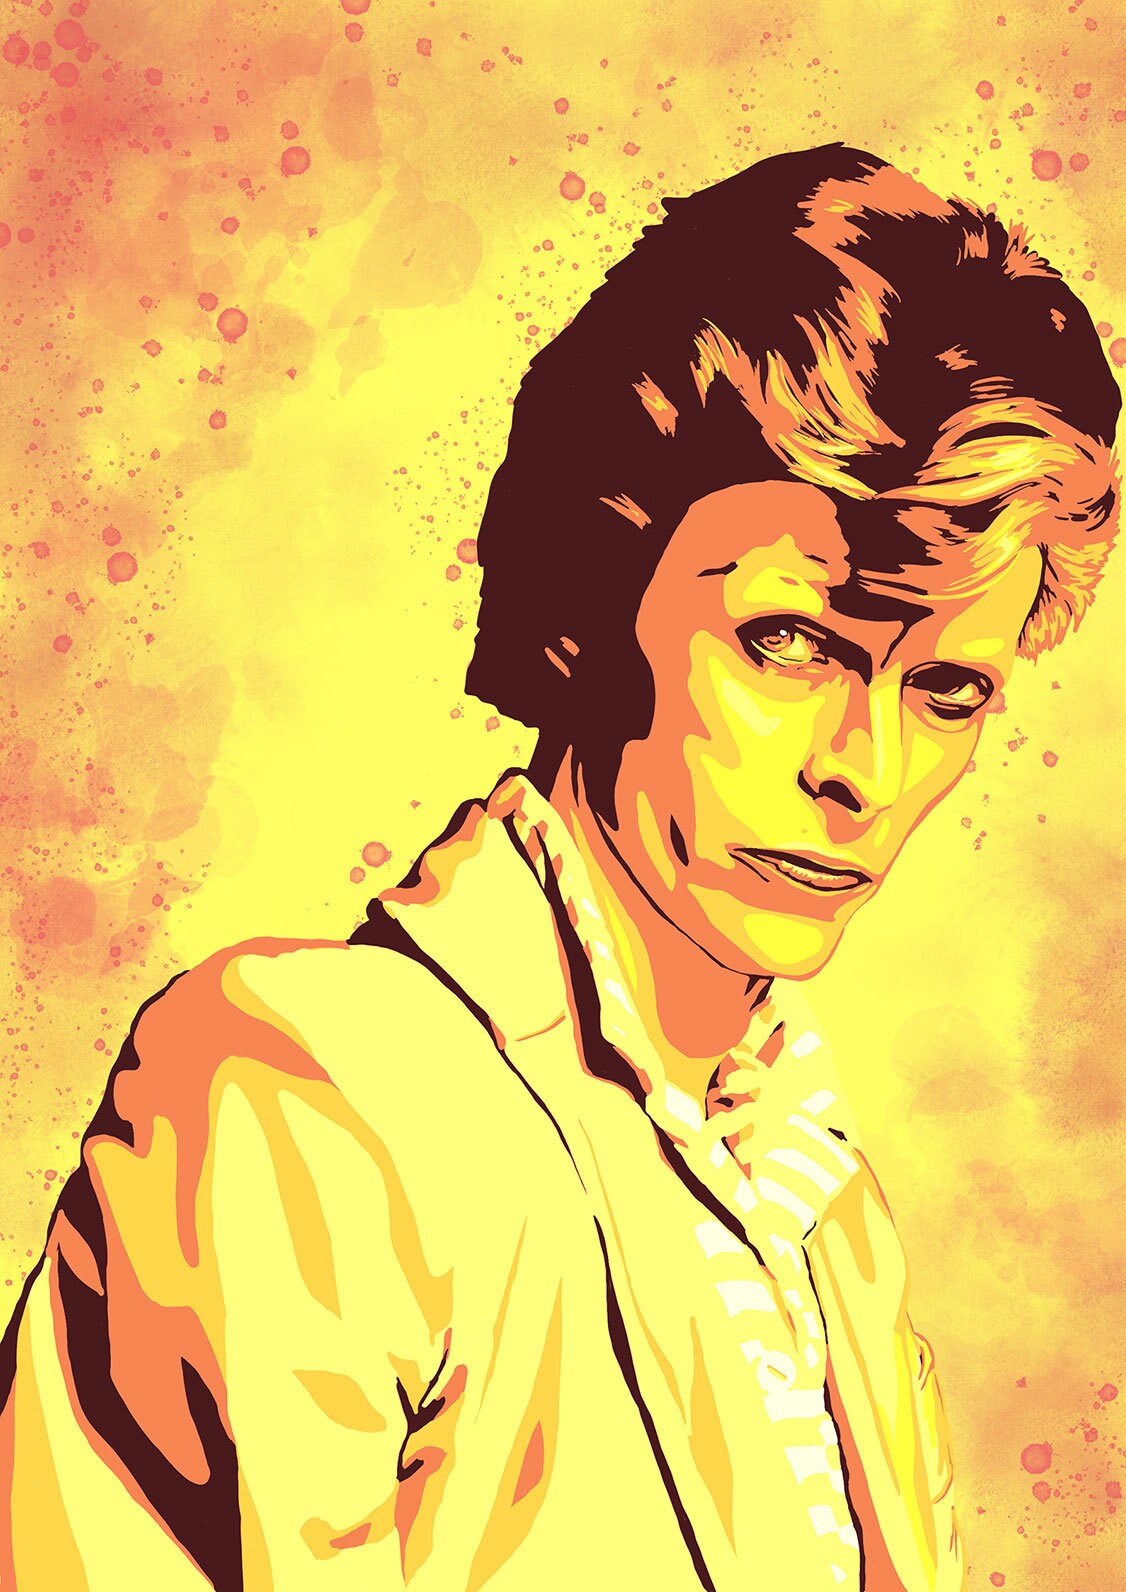 David Bowie art print unframed, David Bowie Poster, Bowie Wall Art, Bowie fan gift, pop art, music poster, Diamond Dogs, yellow suit, 1974